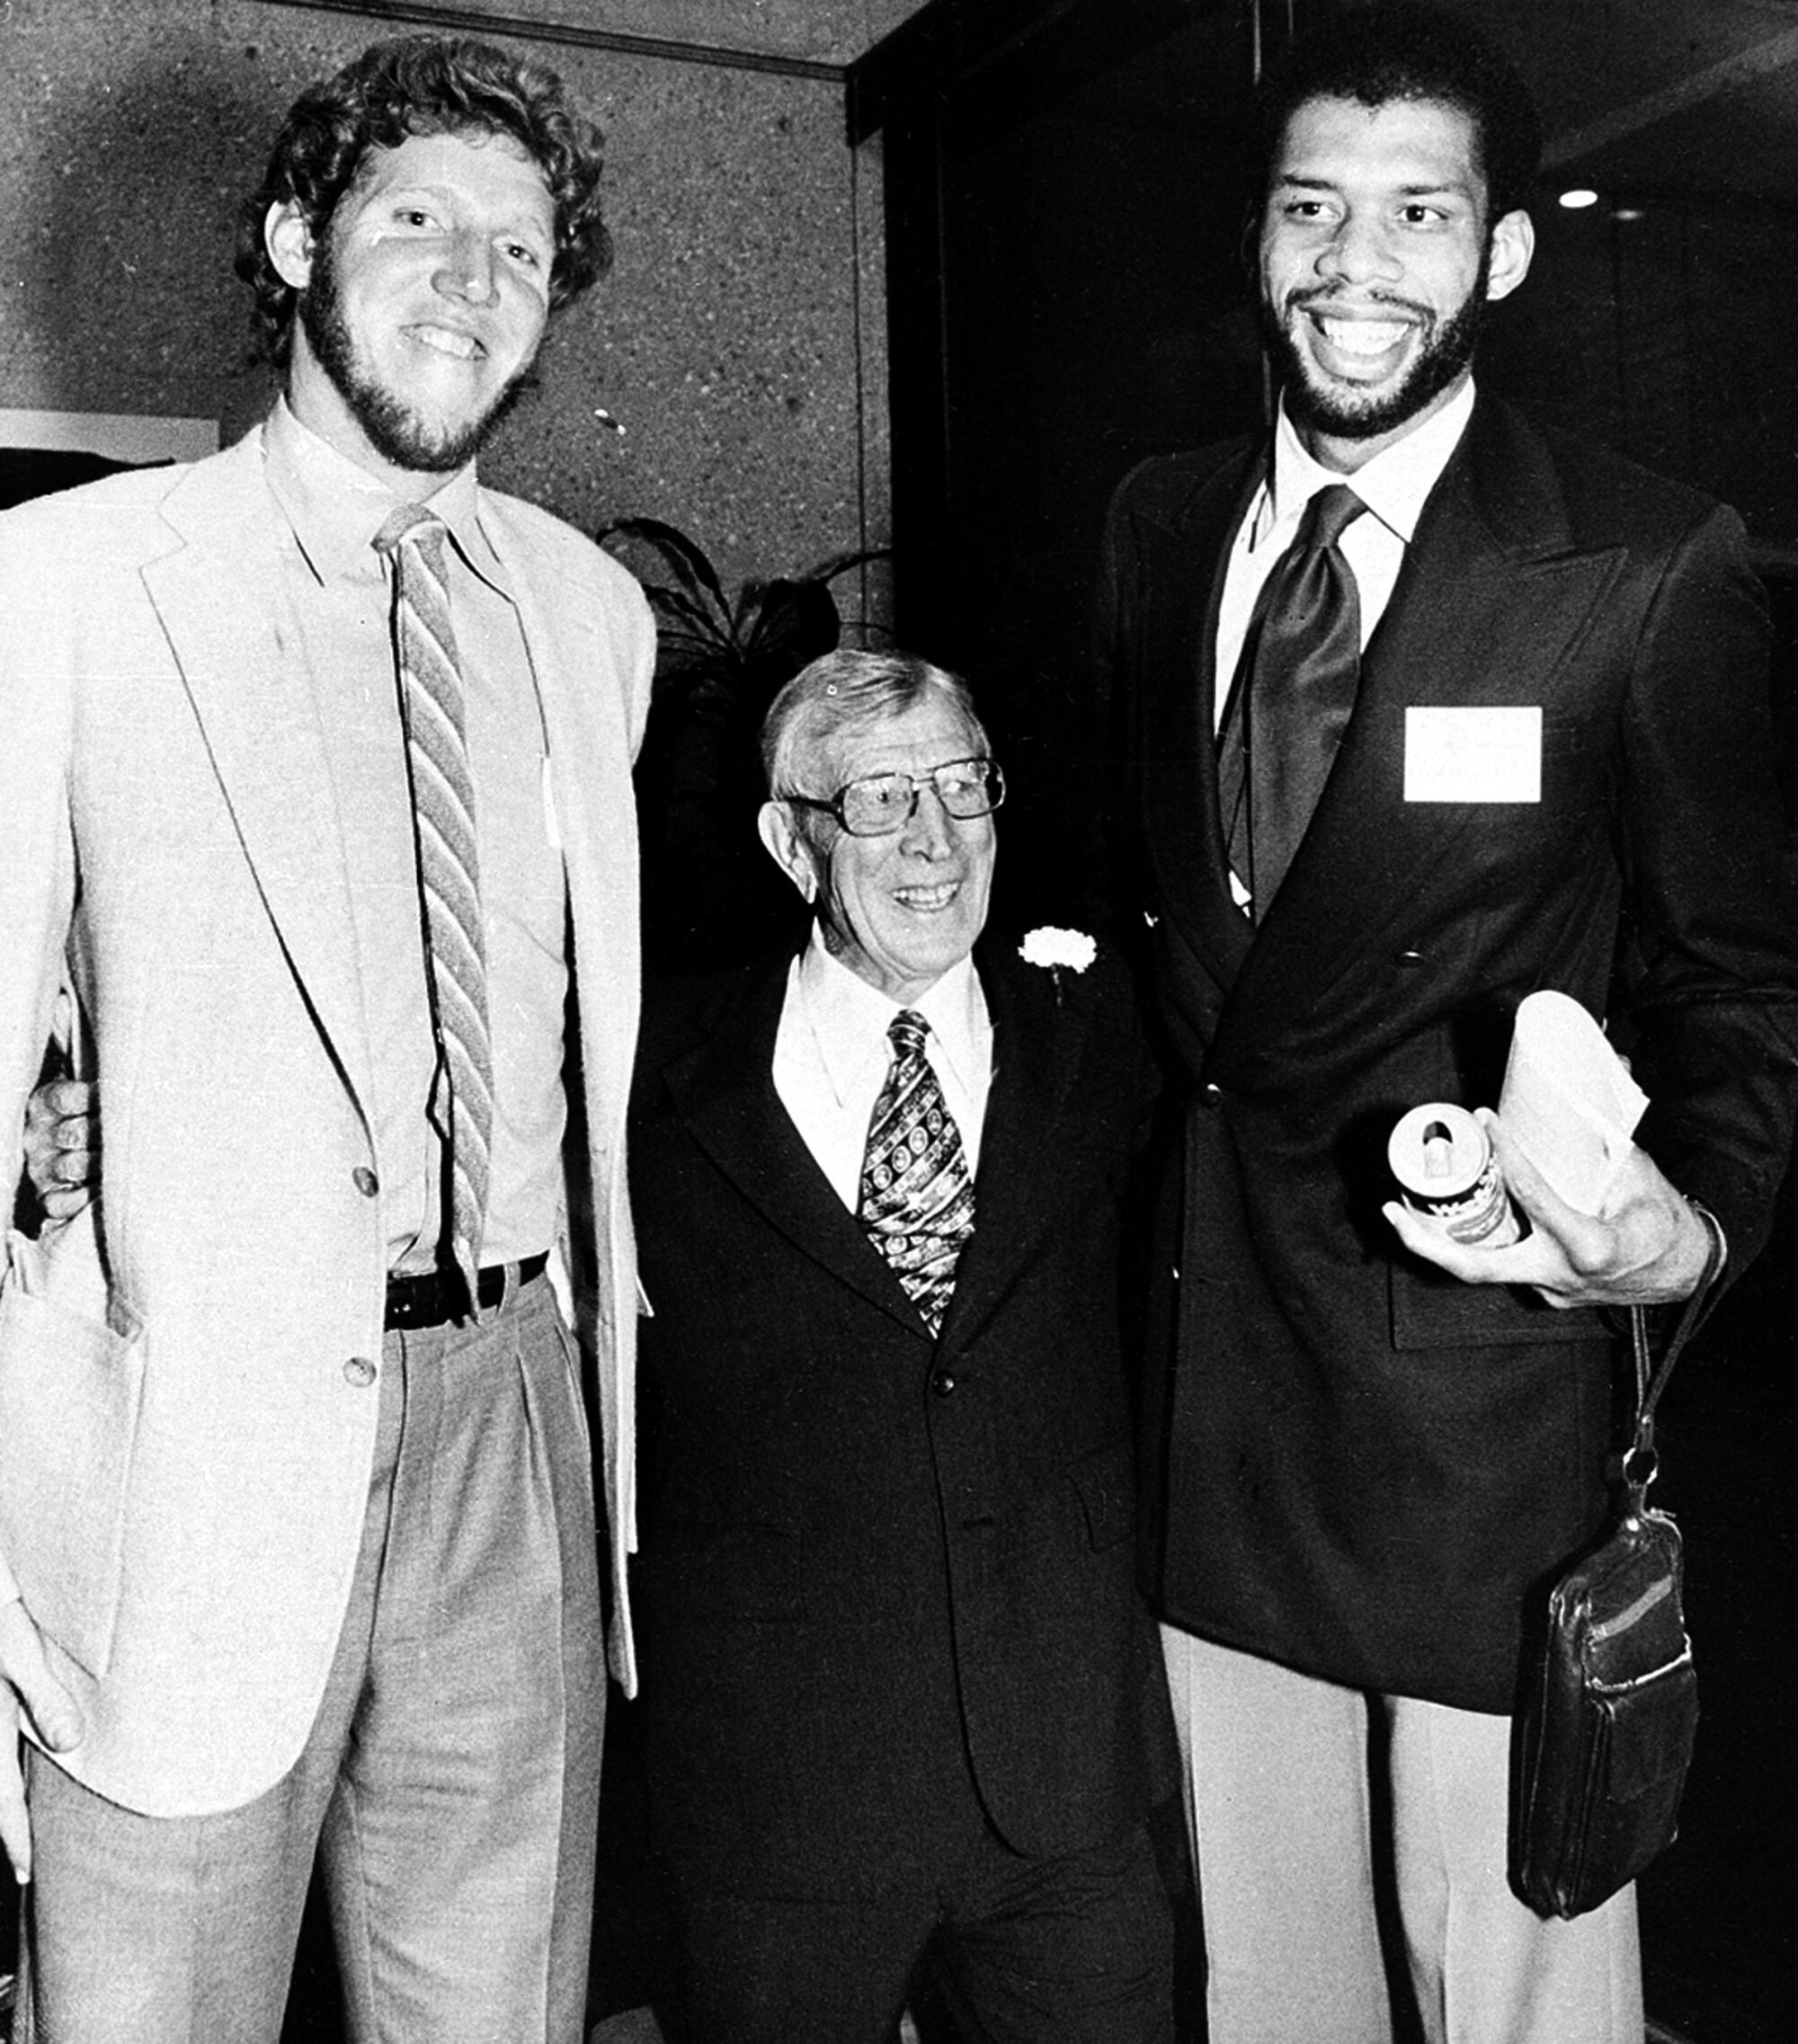  John Wooden poses with UCLA alumni and pro basketball stars Bill Walton, left, and Kareem Abdul-Jabbar.